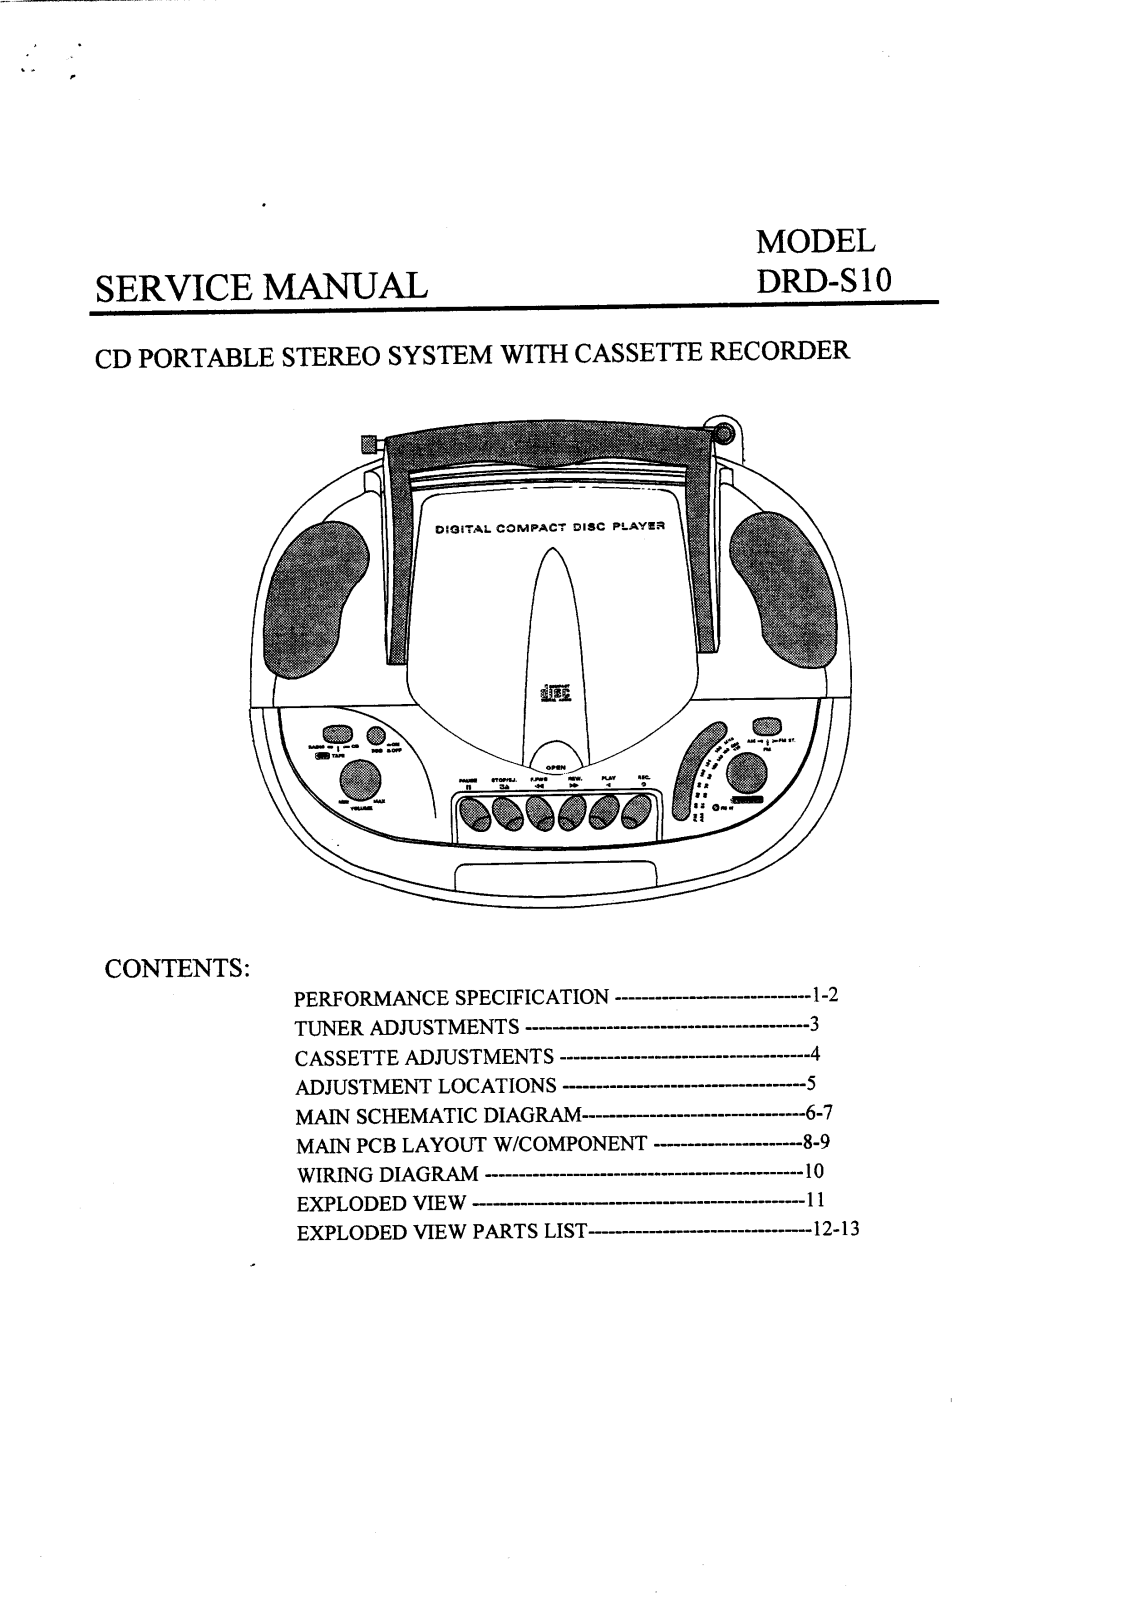 Daewoo DRD-S10 Service Manual